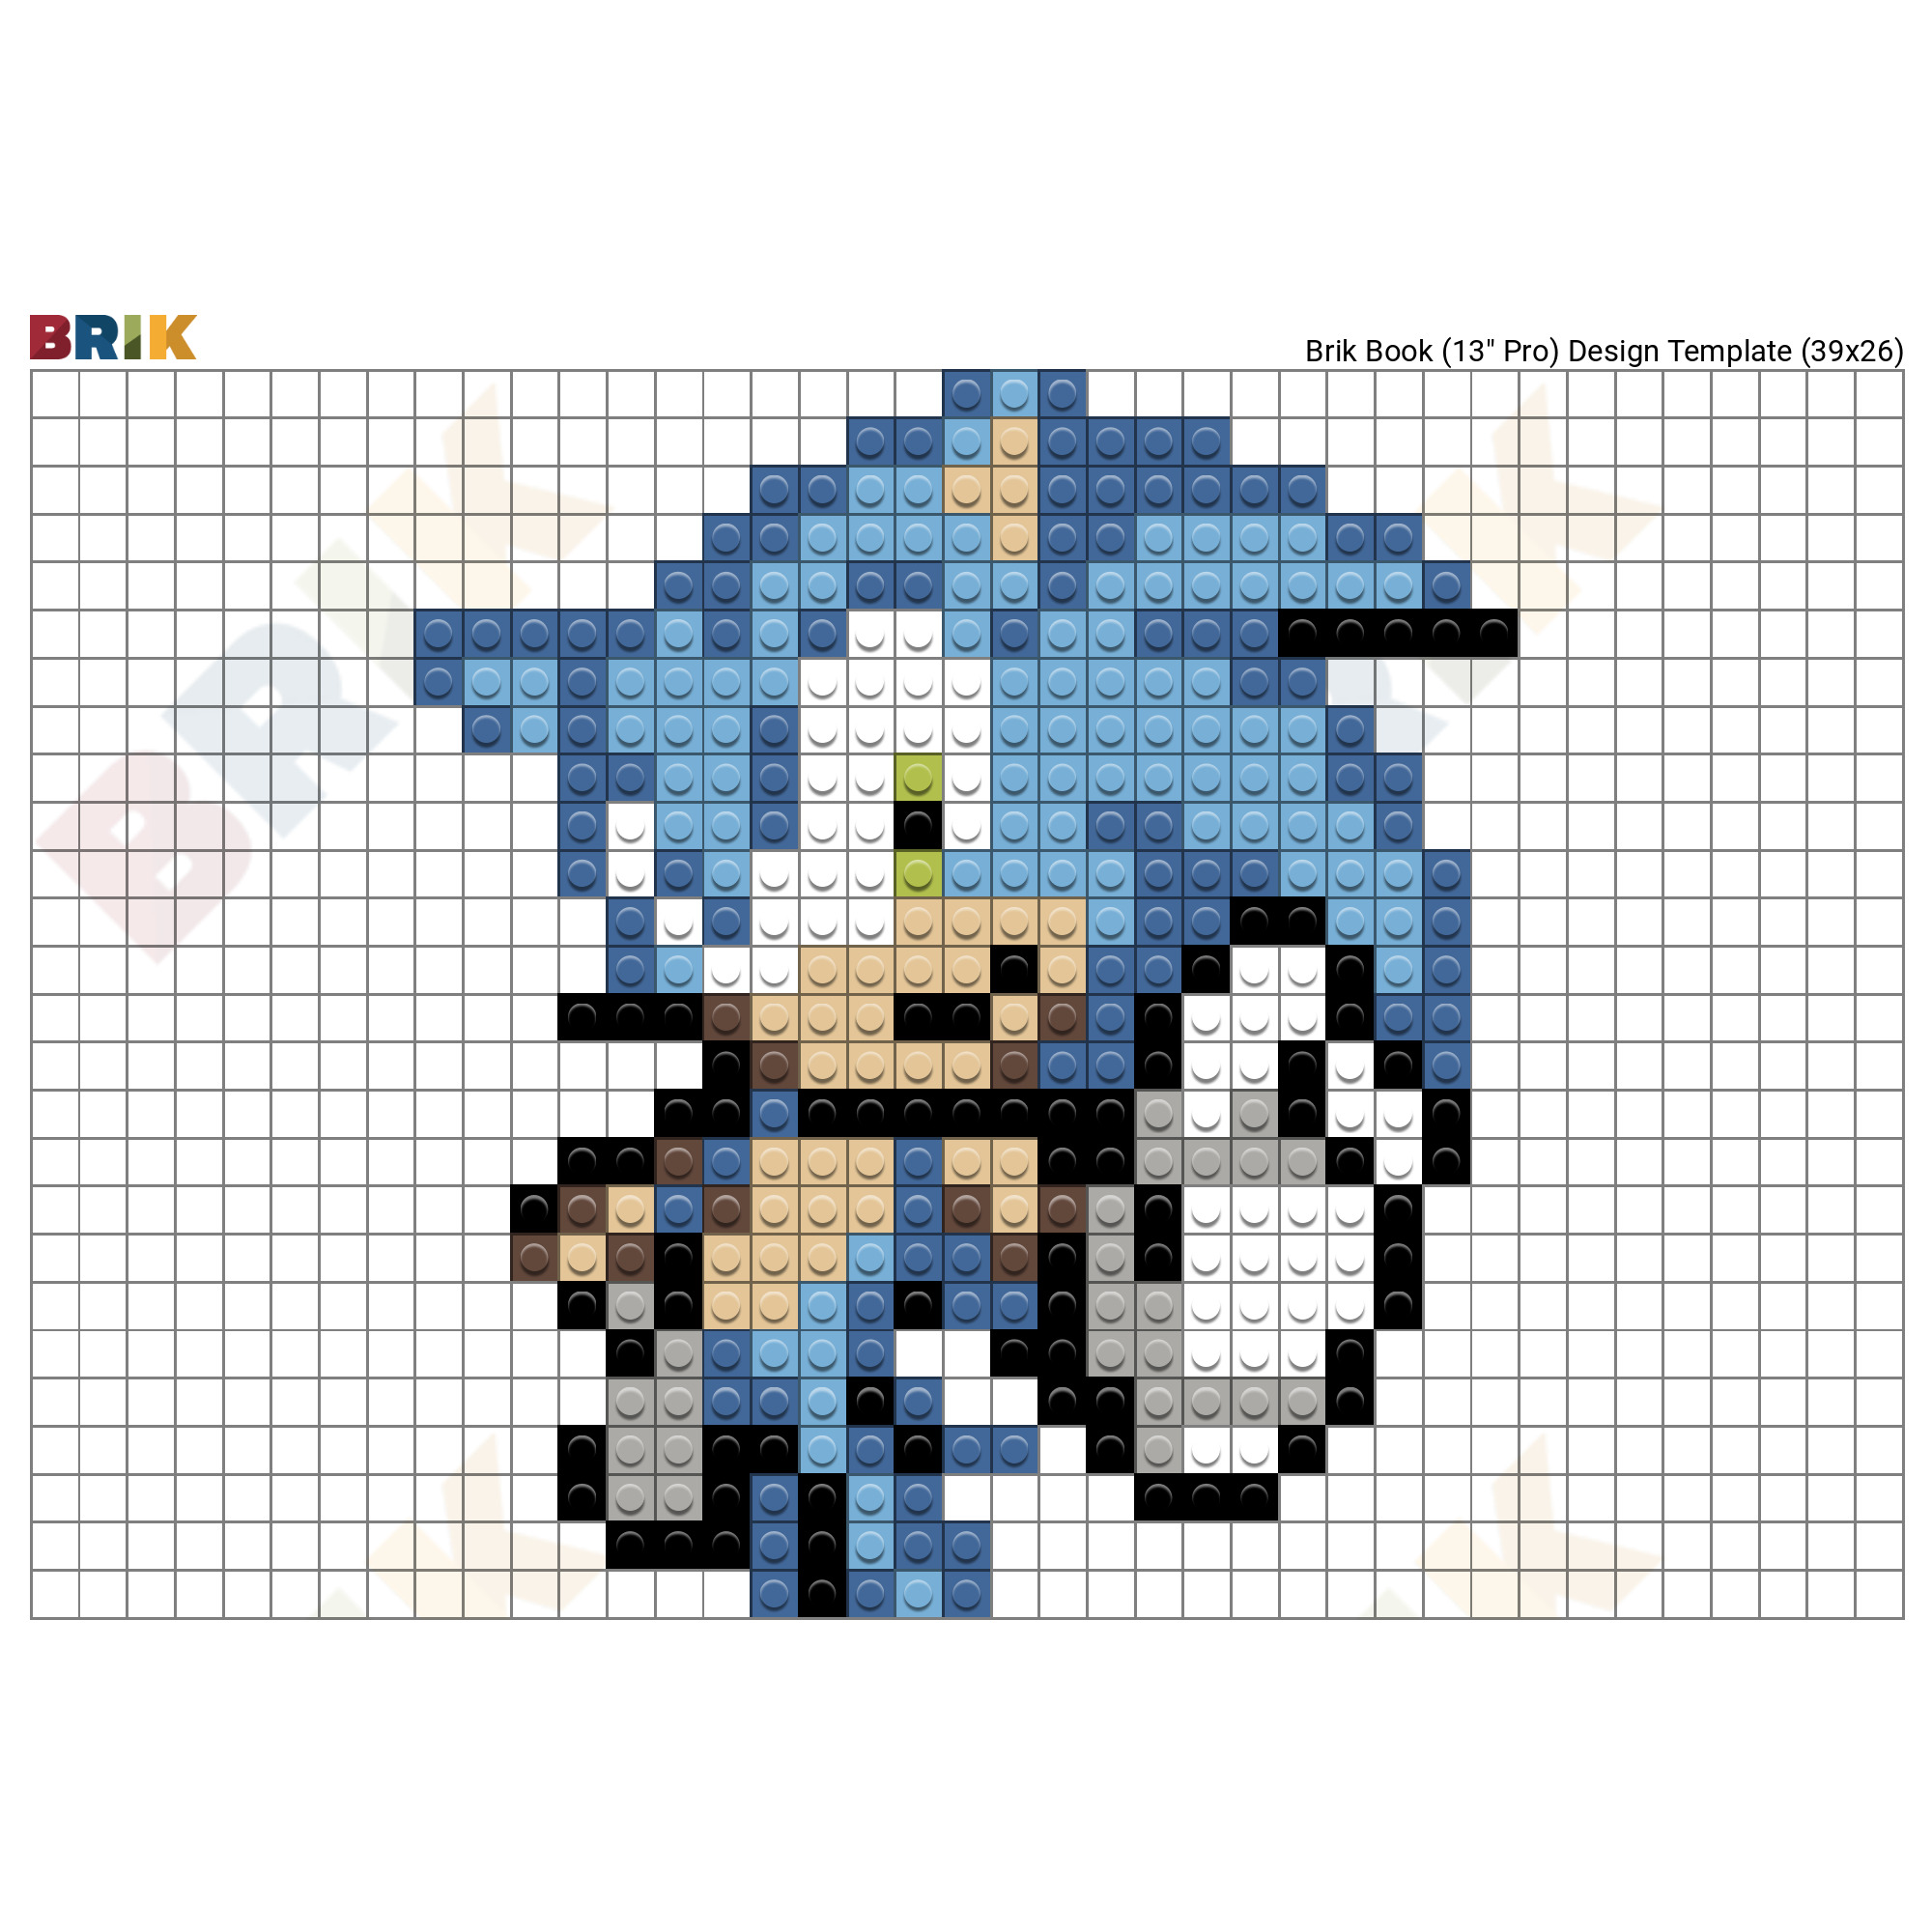 32x32 Sonic! by PixelKoko 💥